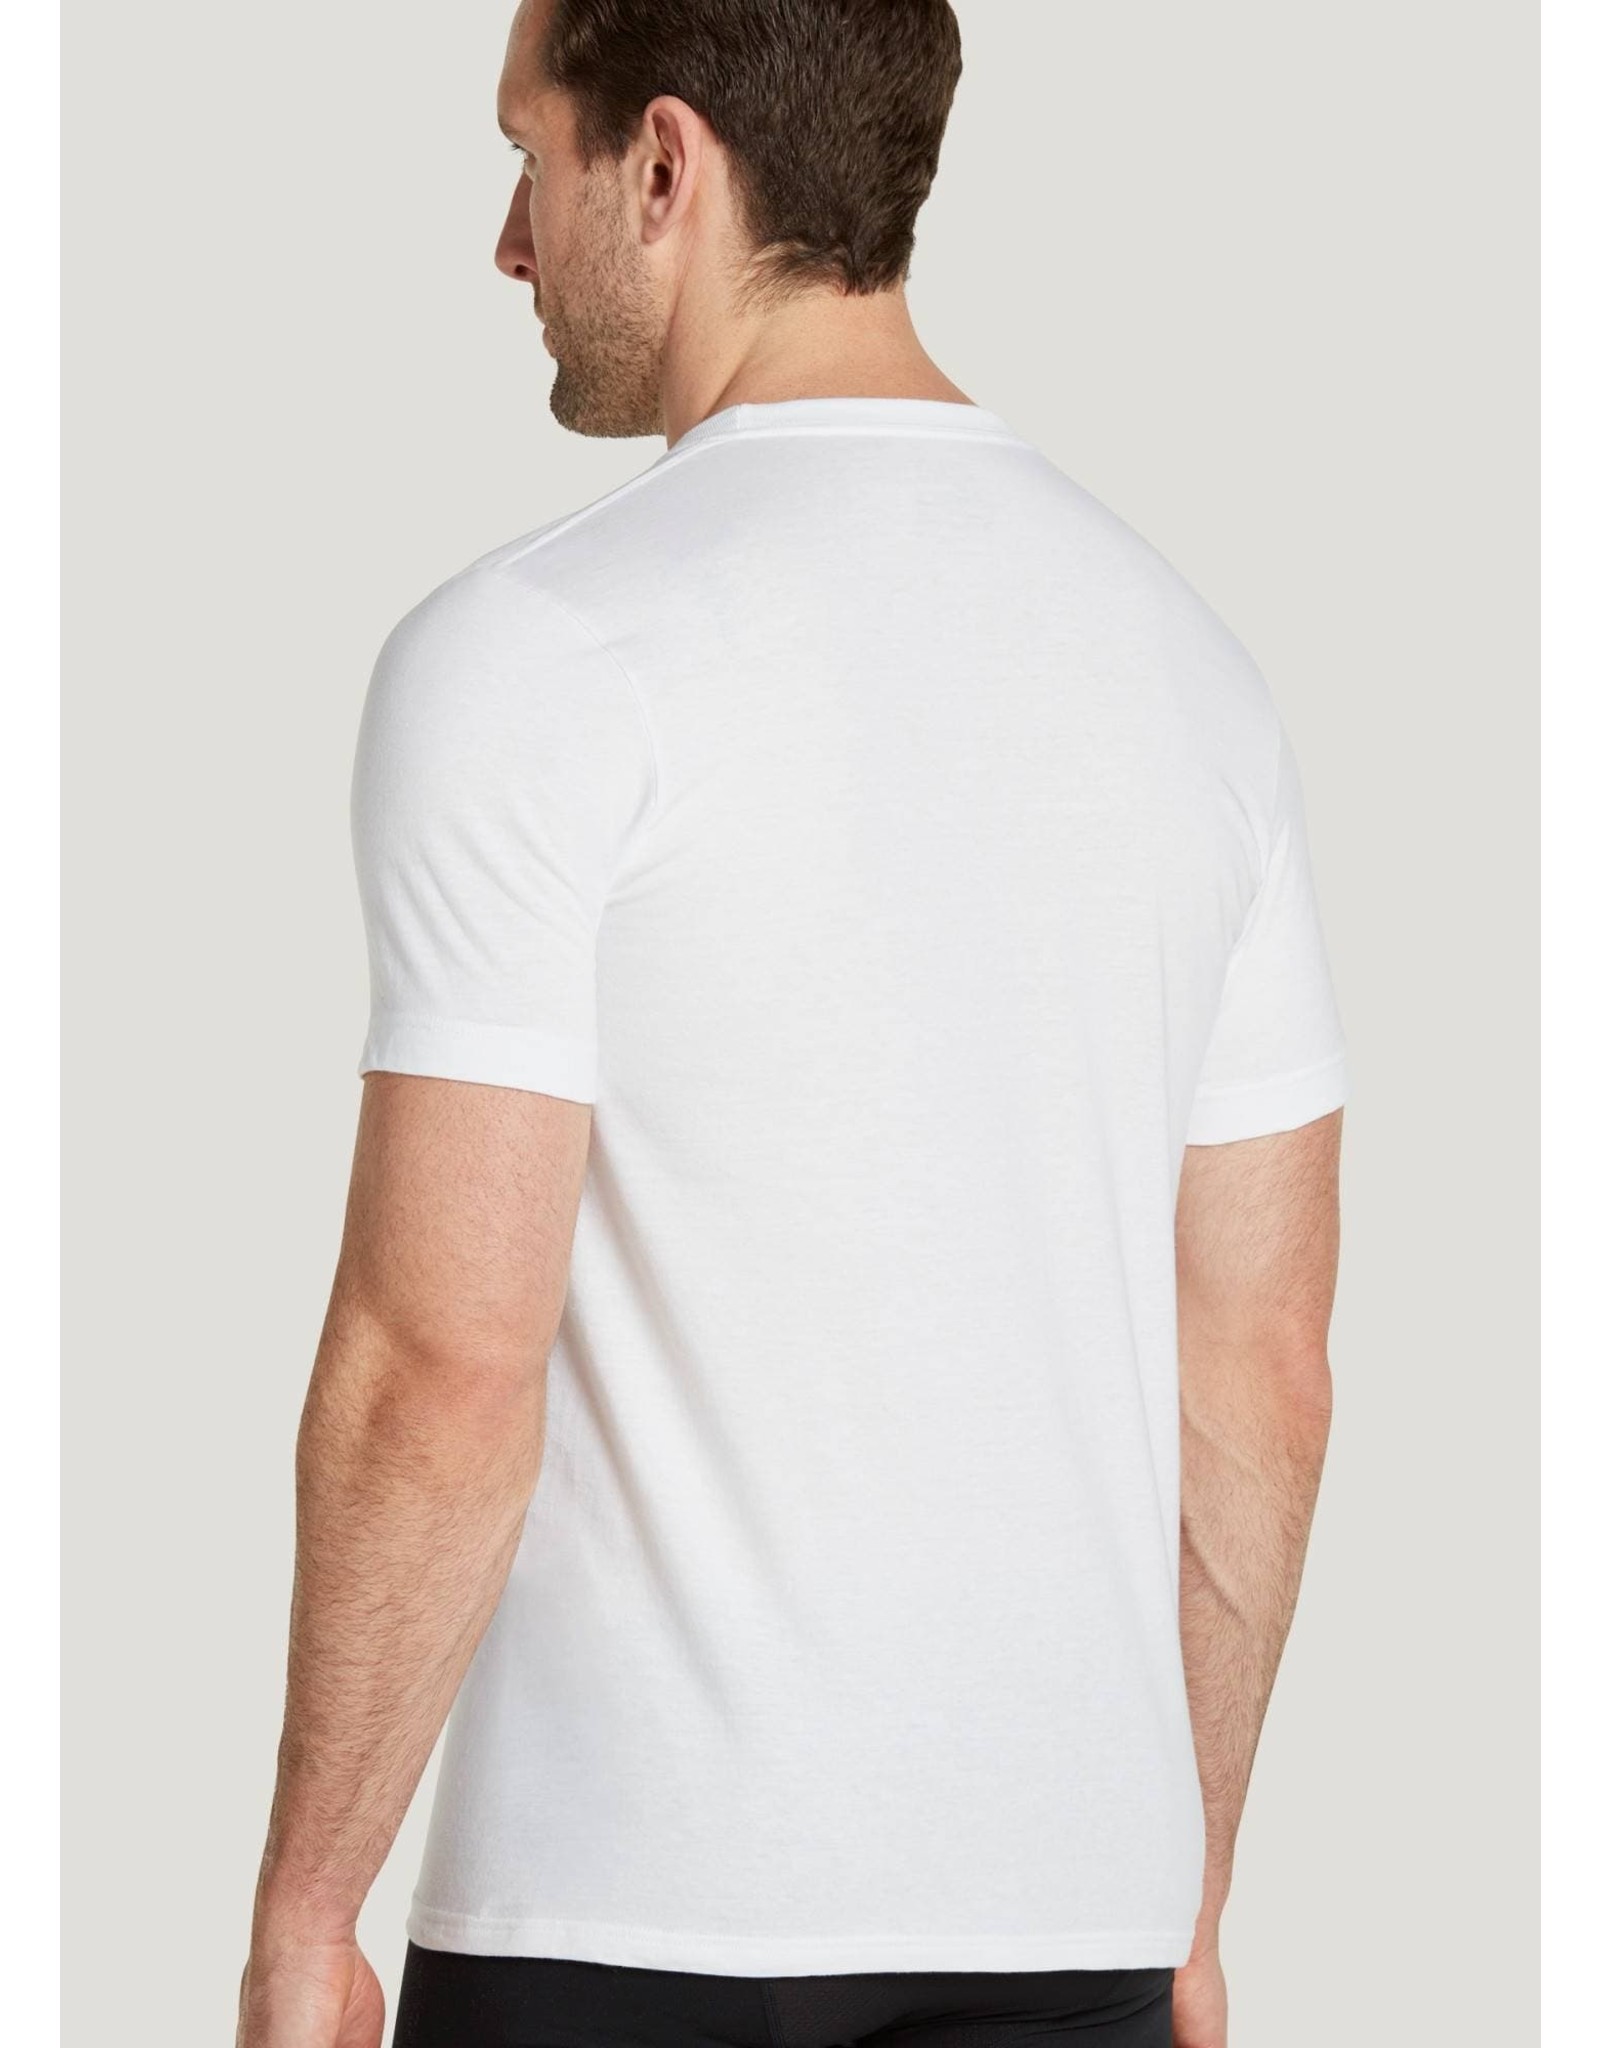 JOCKEY Classic Knits 100% Cotton T-Shirts, Crew Neck (3 Pack)